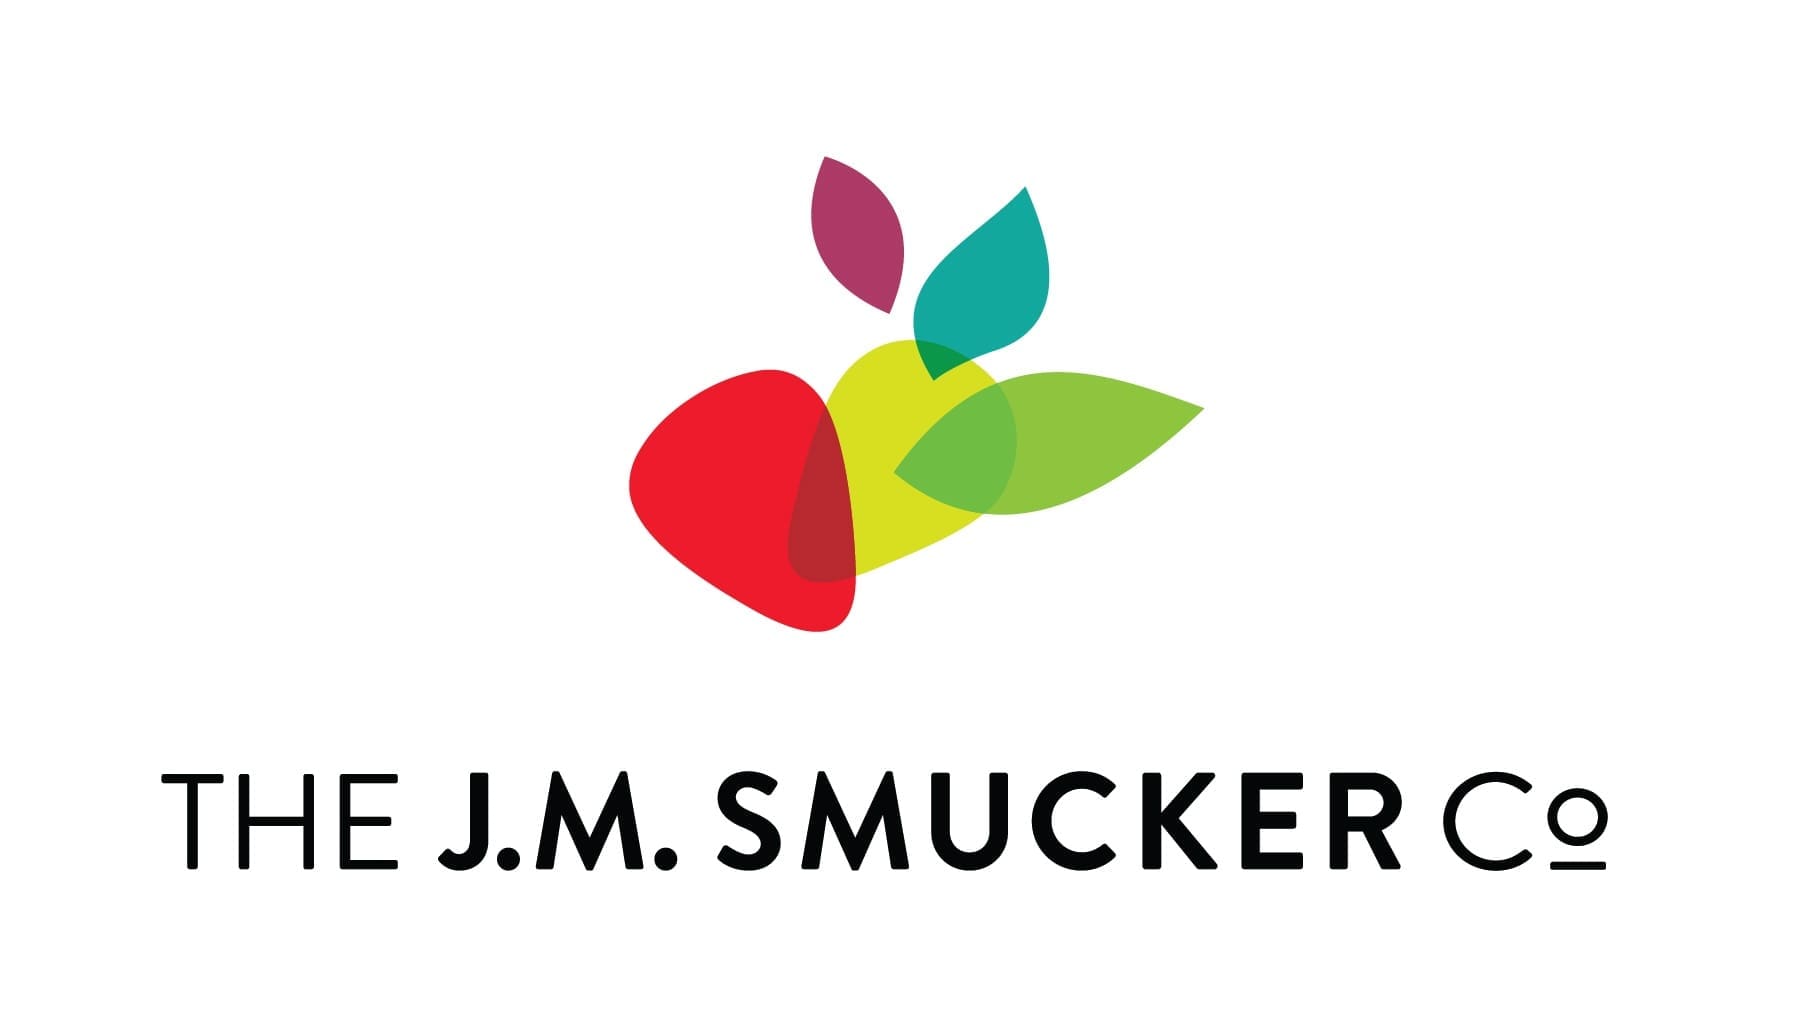 The JM Smucker Co